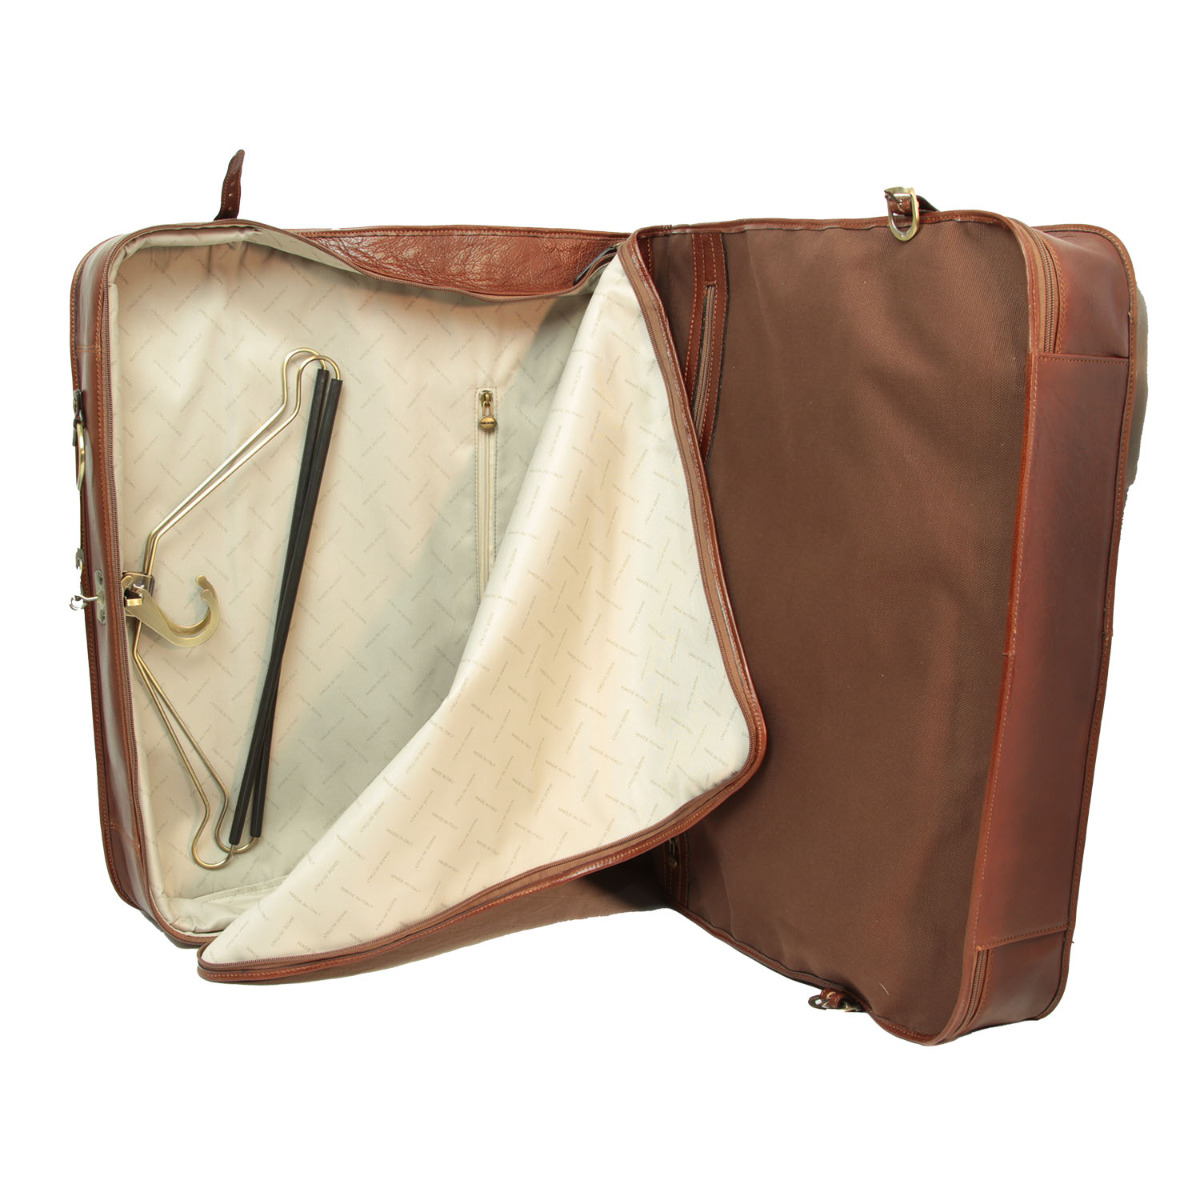 Full grain leather garment bag - brown|109593MA|Old Angler Firenze